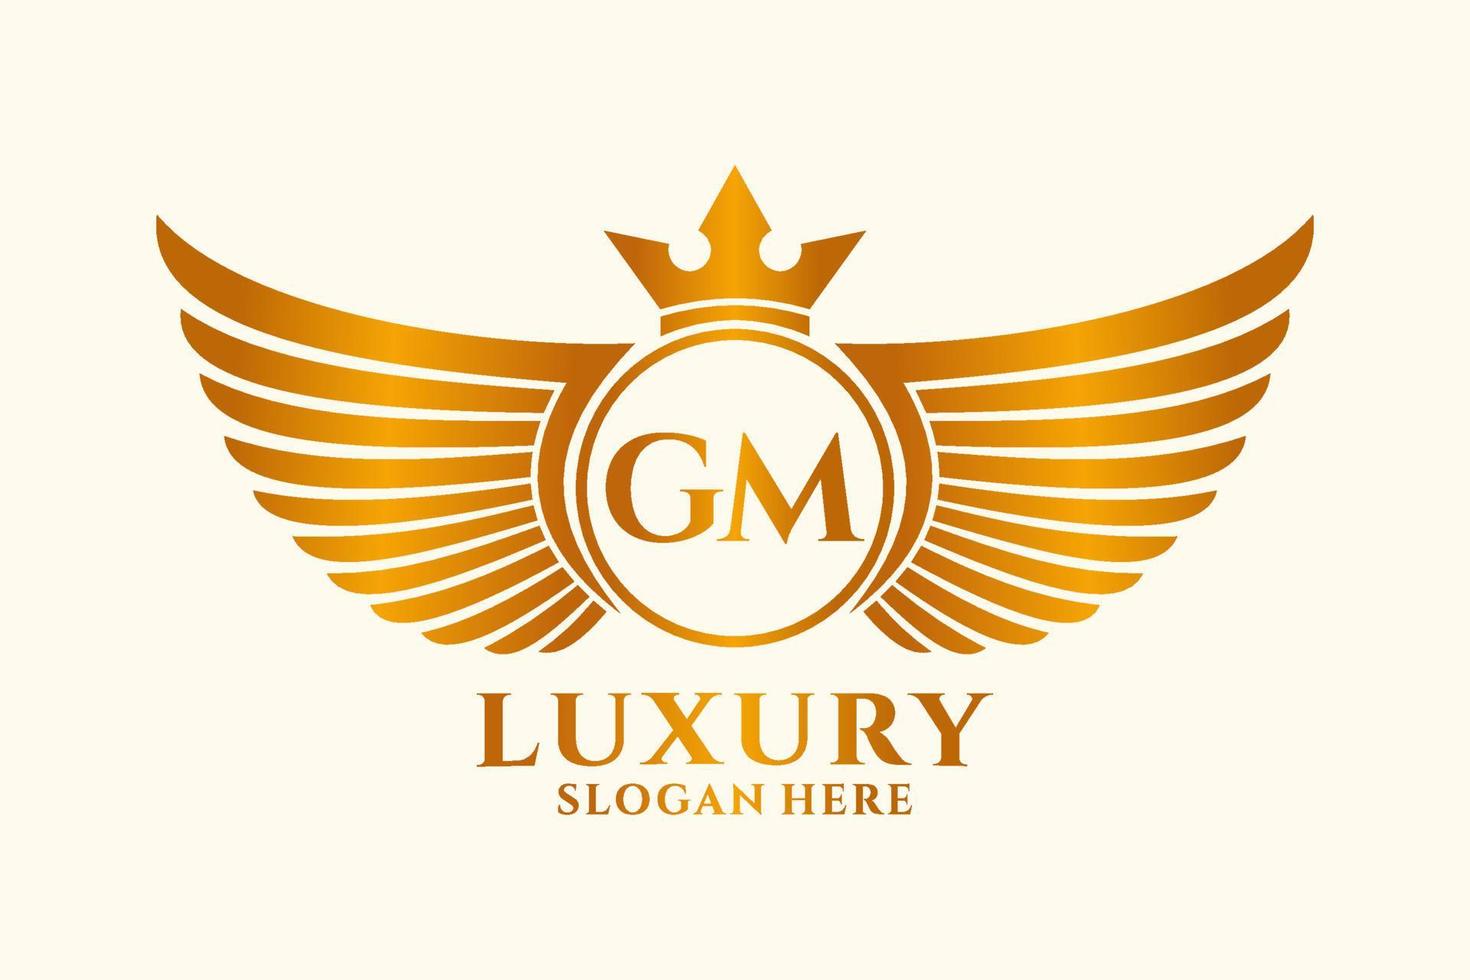 luxe Koninklijk vleugel brief gm kam goud kleur logo vector, zege logo, kam logo, vleugel logo, vector logo sjabloon.